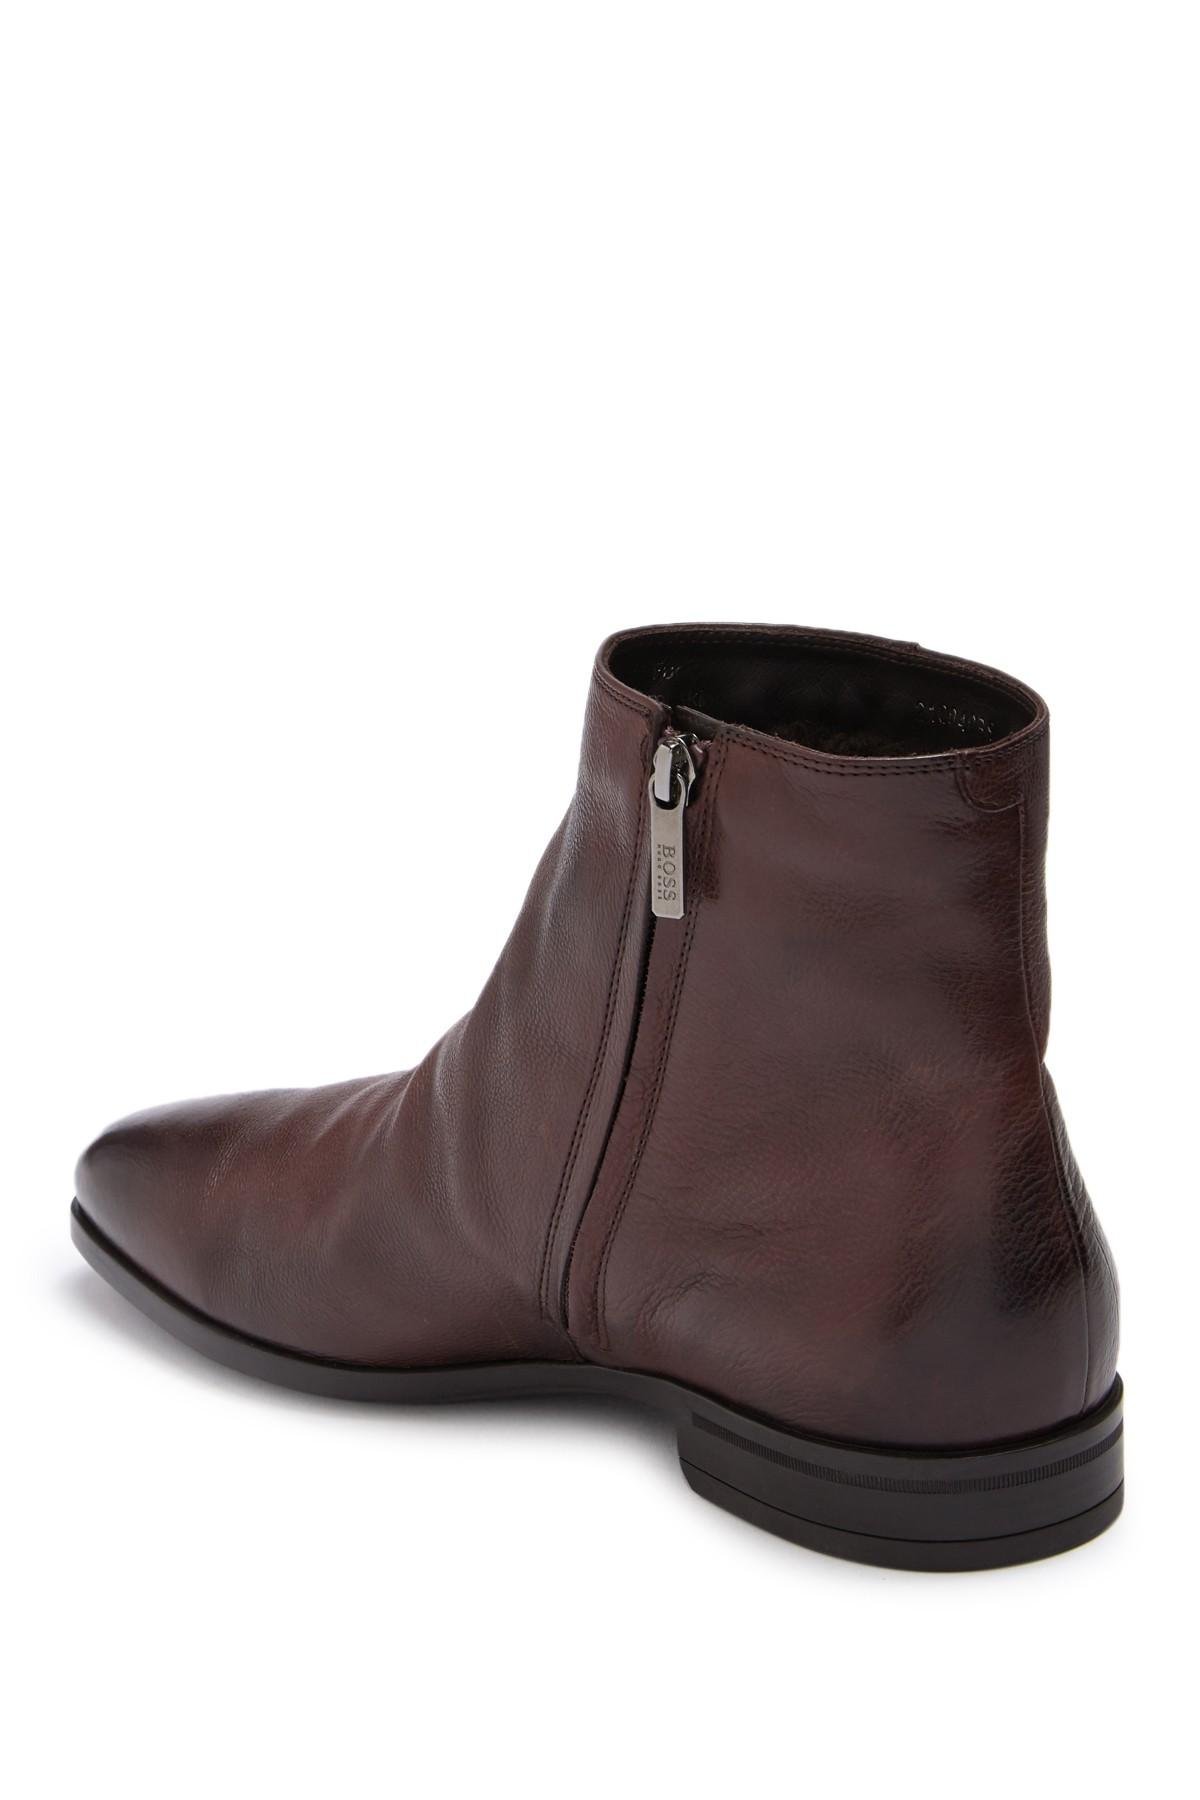 BOSS by HUGO BOSS Kensington Leather Zip Ankle Boot in Brown for Men | Lyst